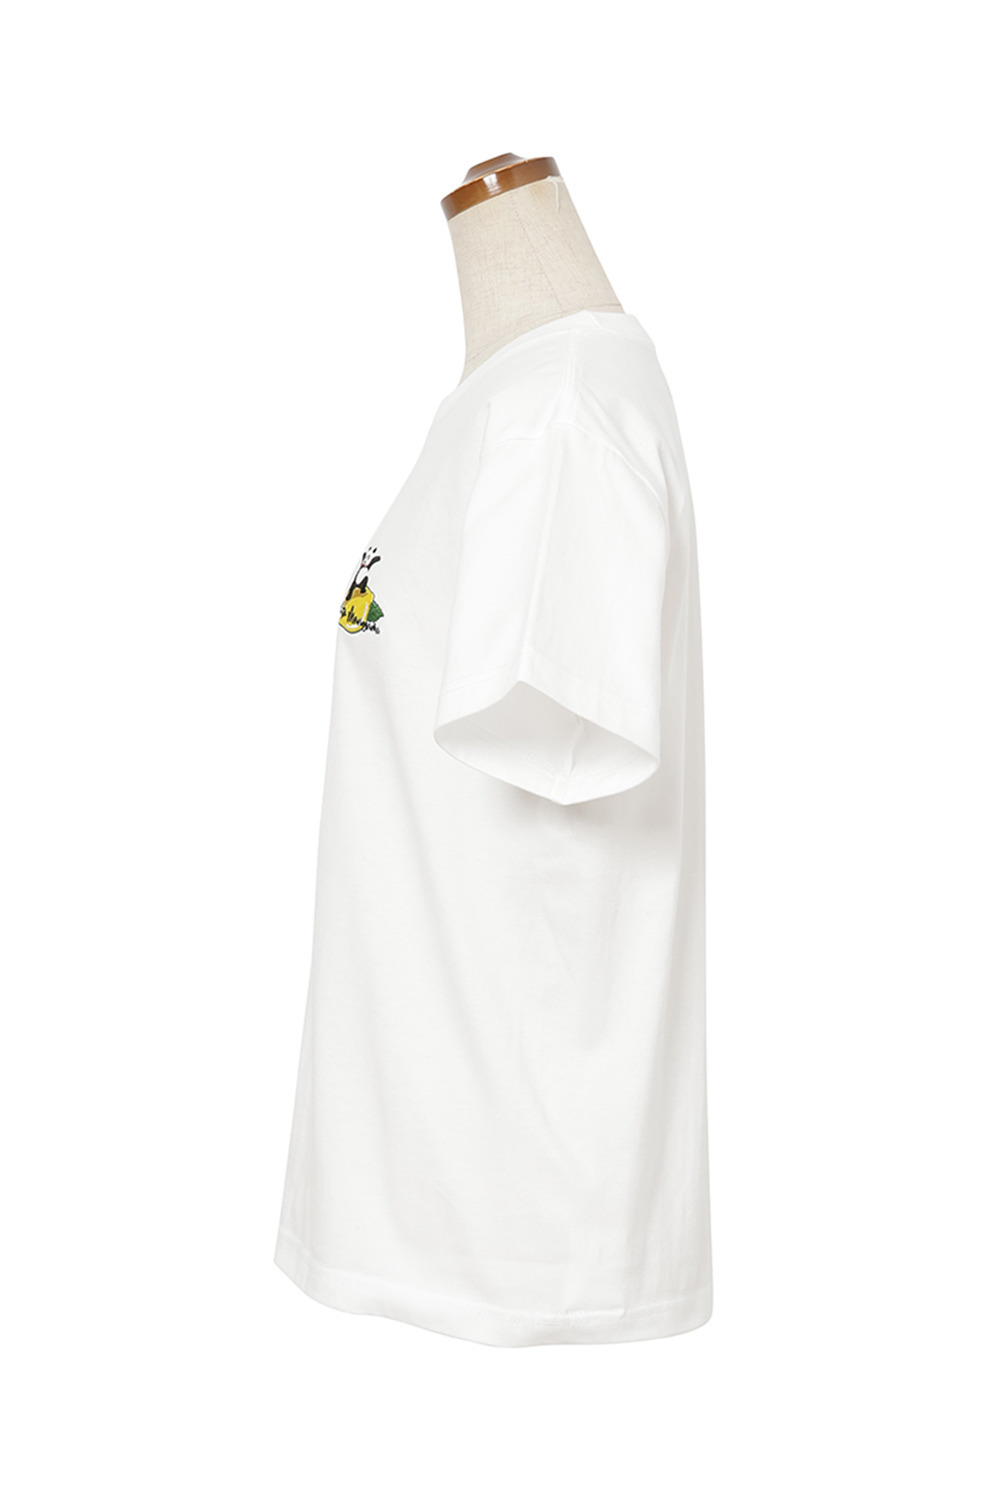 PANDA Embroidery Tシャツ 詳細画像 ホワイト 1